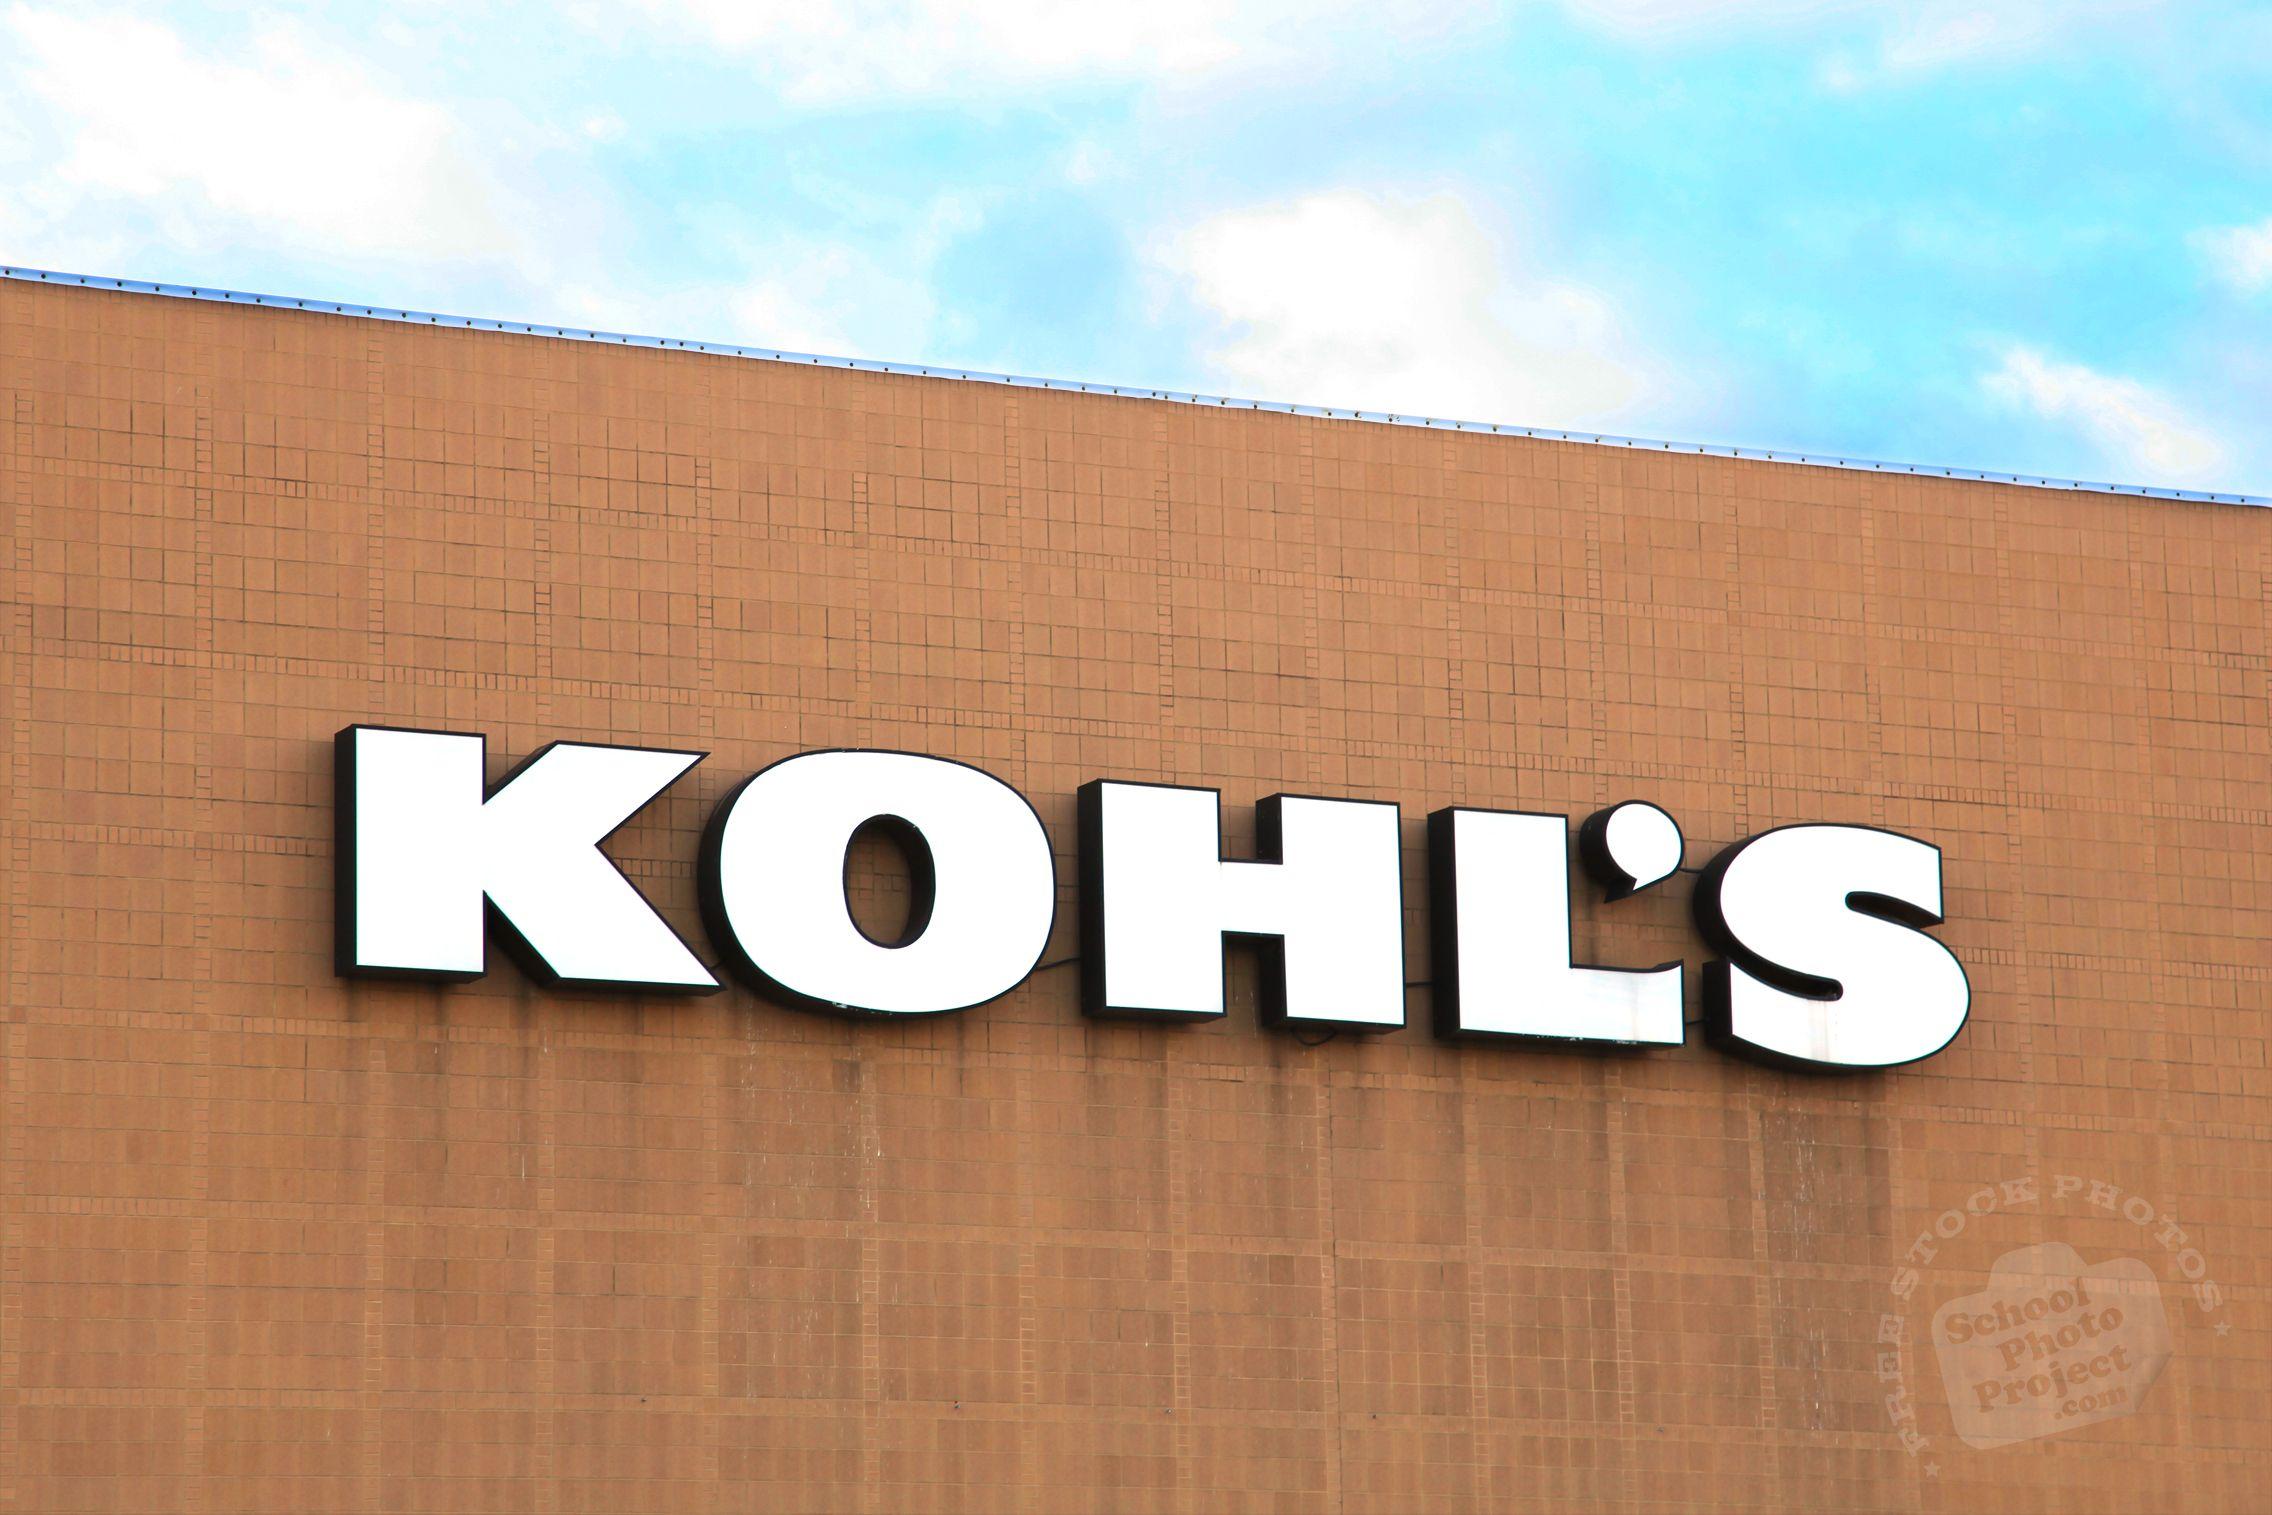 Popular Store Logo - FREE KOHL'S Logo, KOHL'S Identity, Popular Company's Brand Images ...